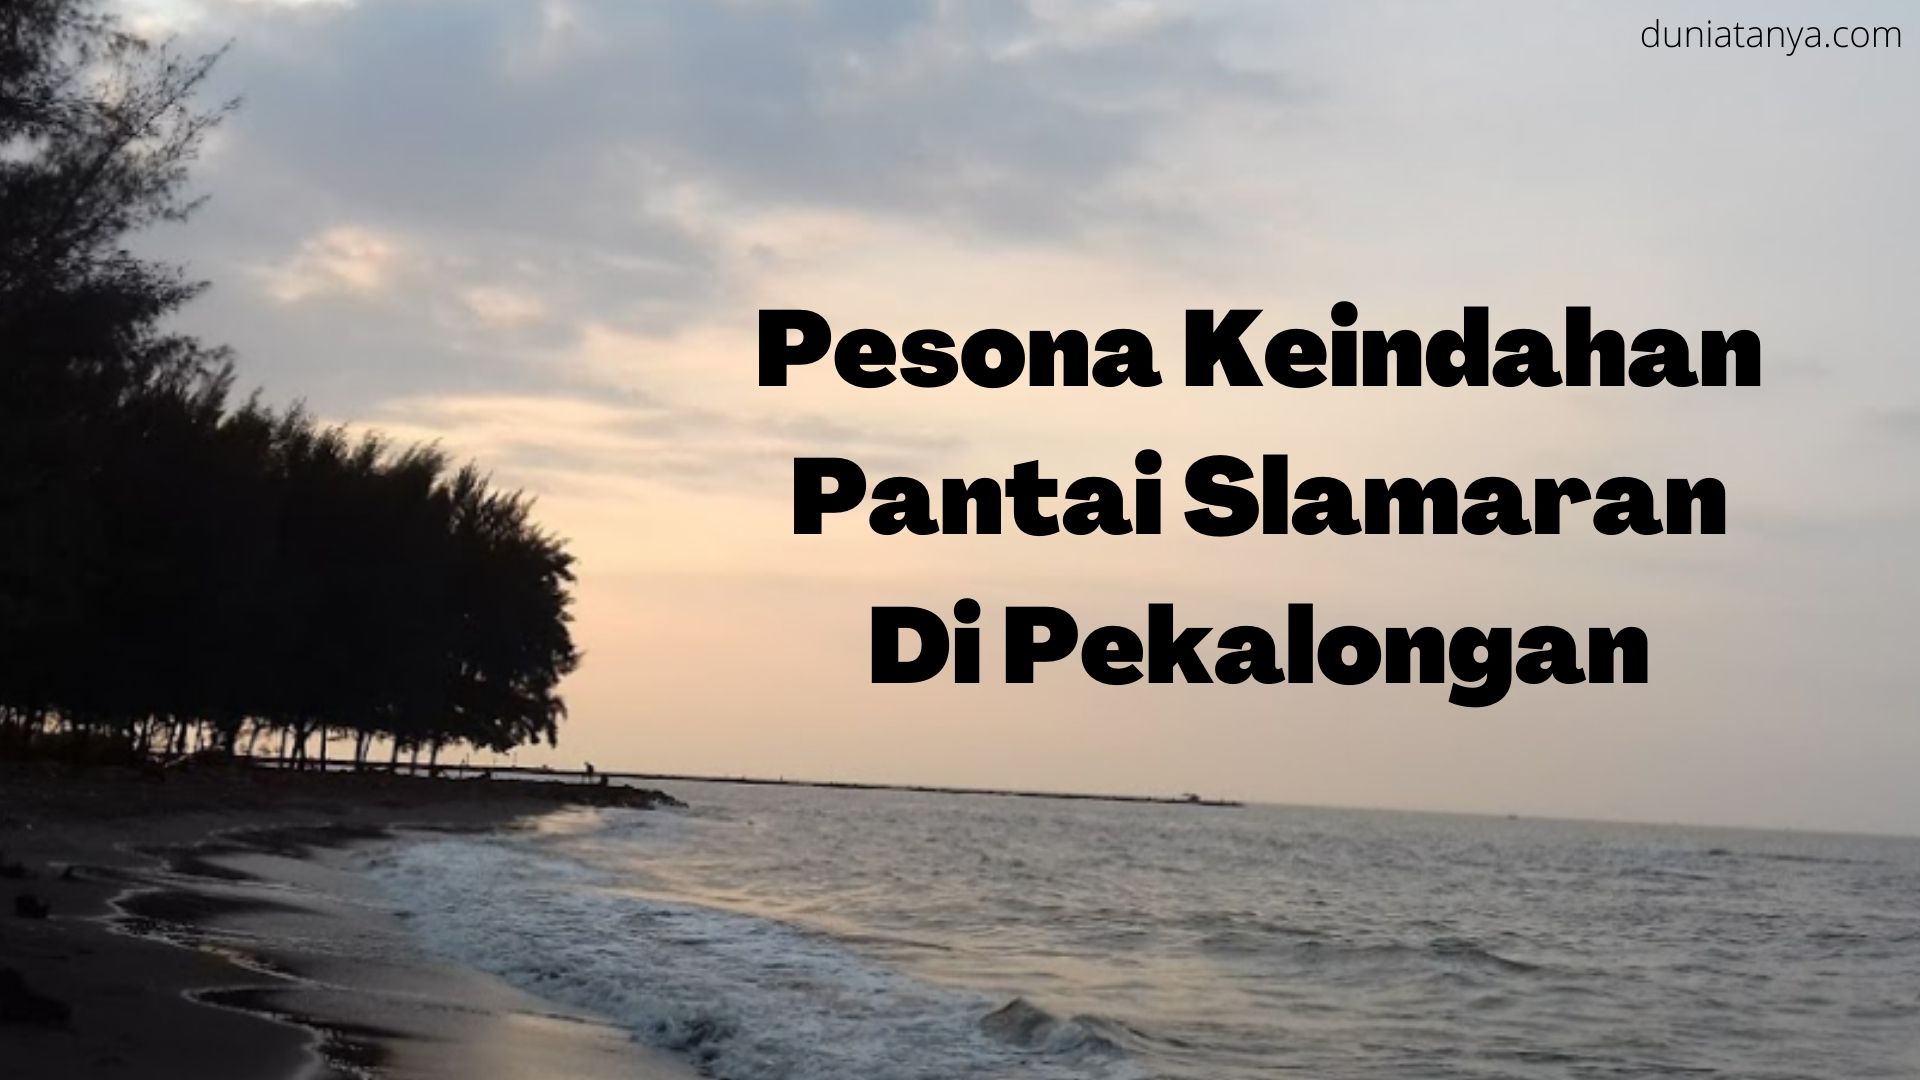 You are currently viewing Pesona Keindahan Pantai Slamaran Di Pekalongan